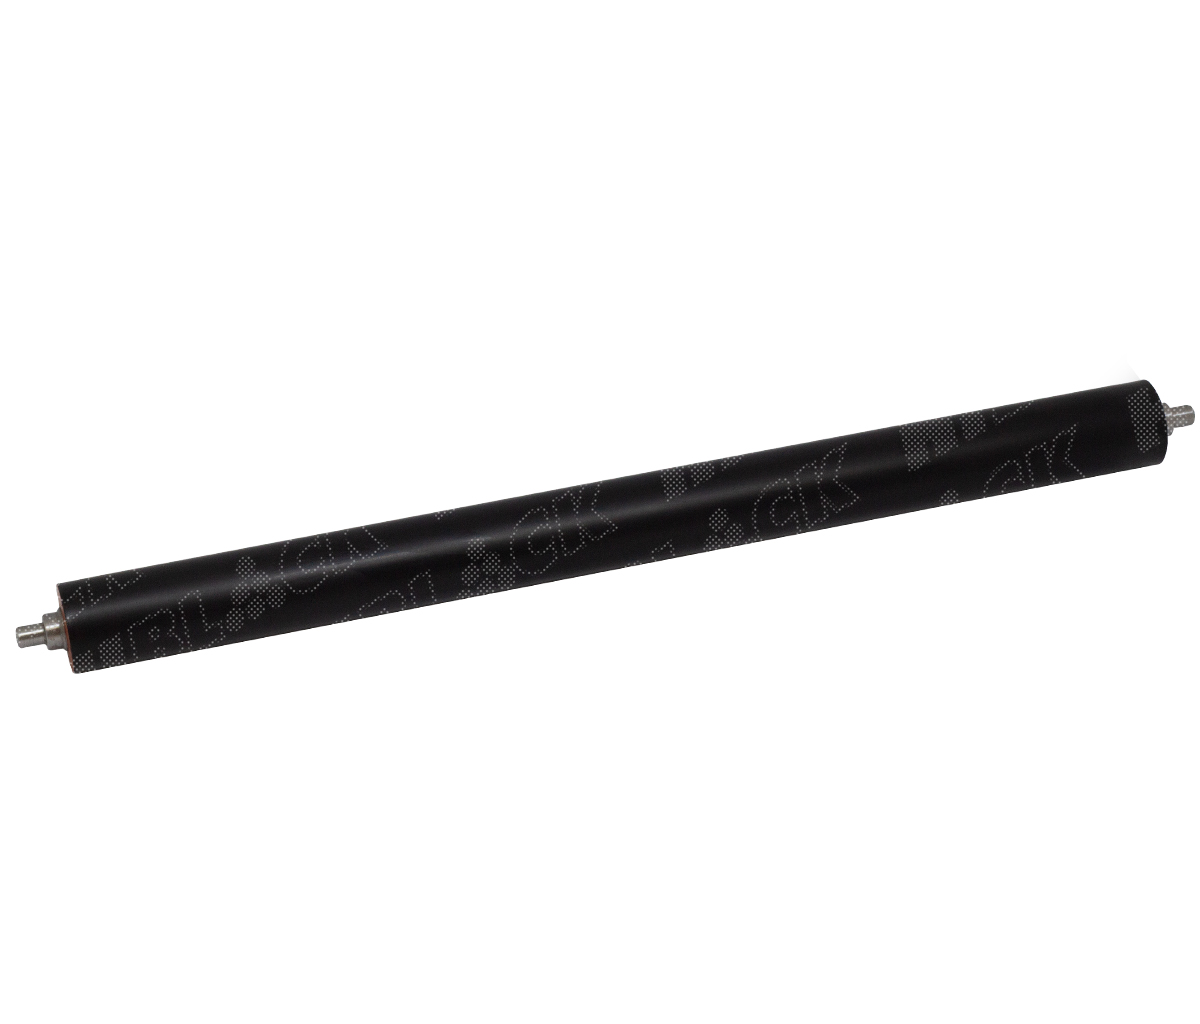 Вал резиновый нижний Hi-Black для Kyocera TASKalfa 180/181/220/221